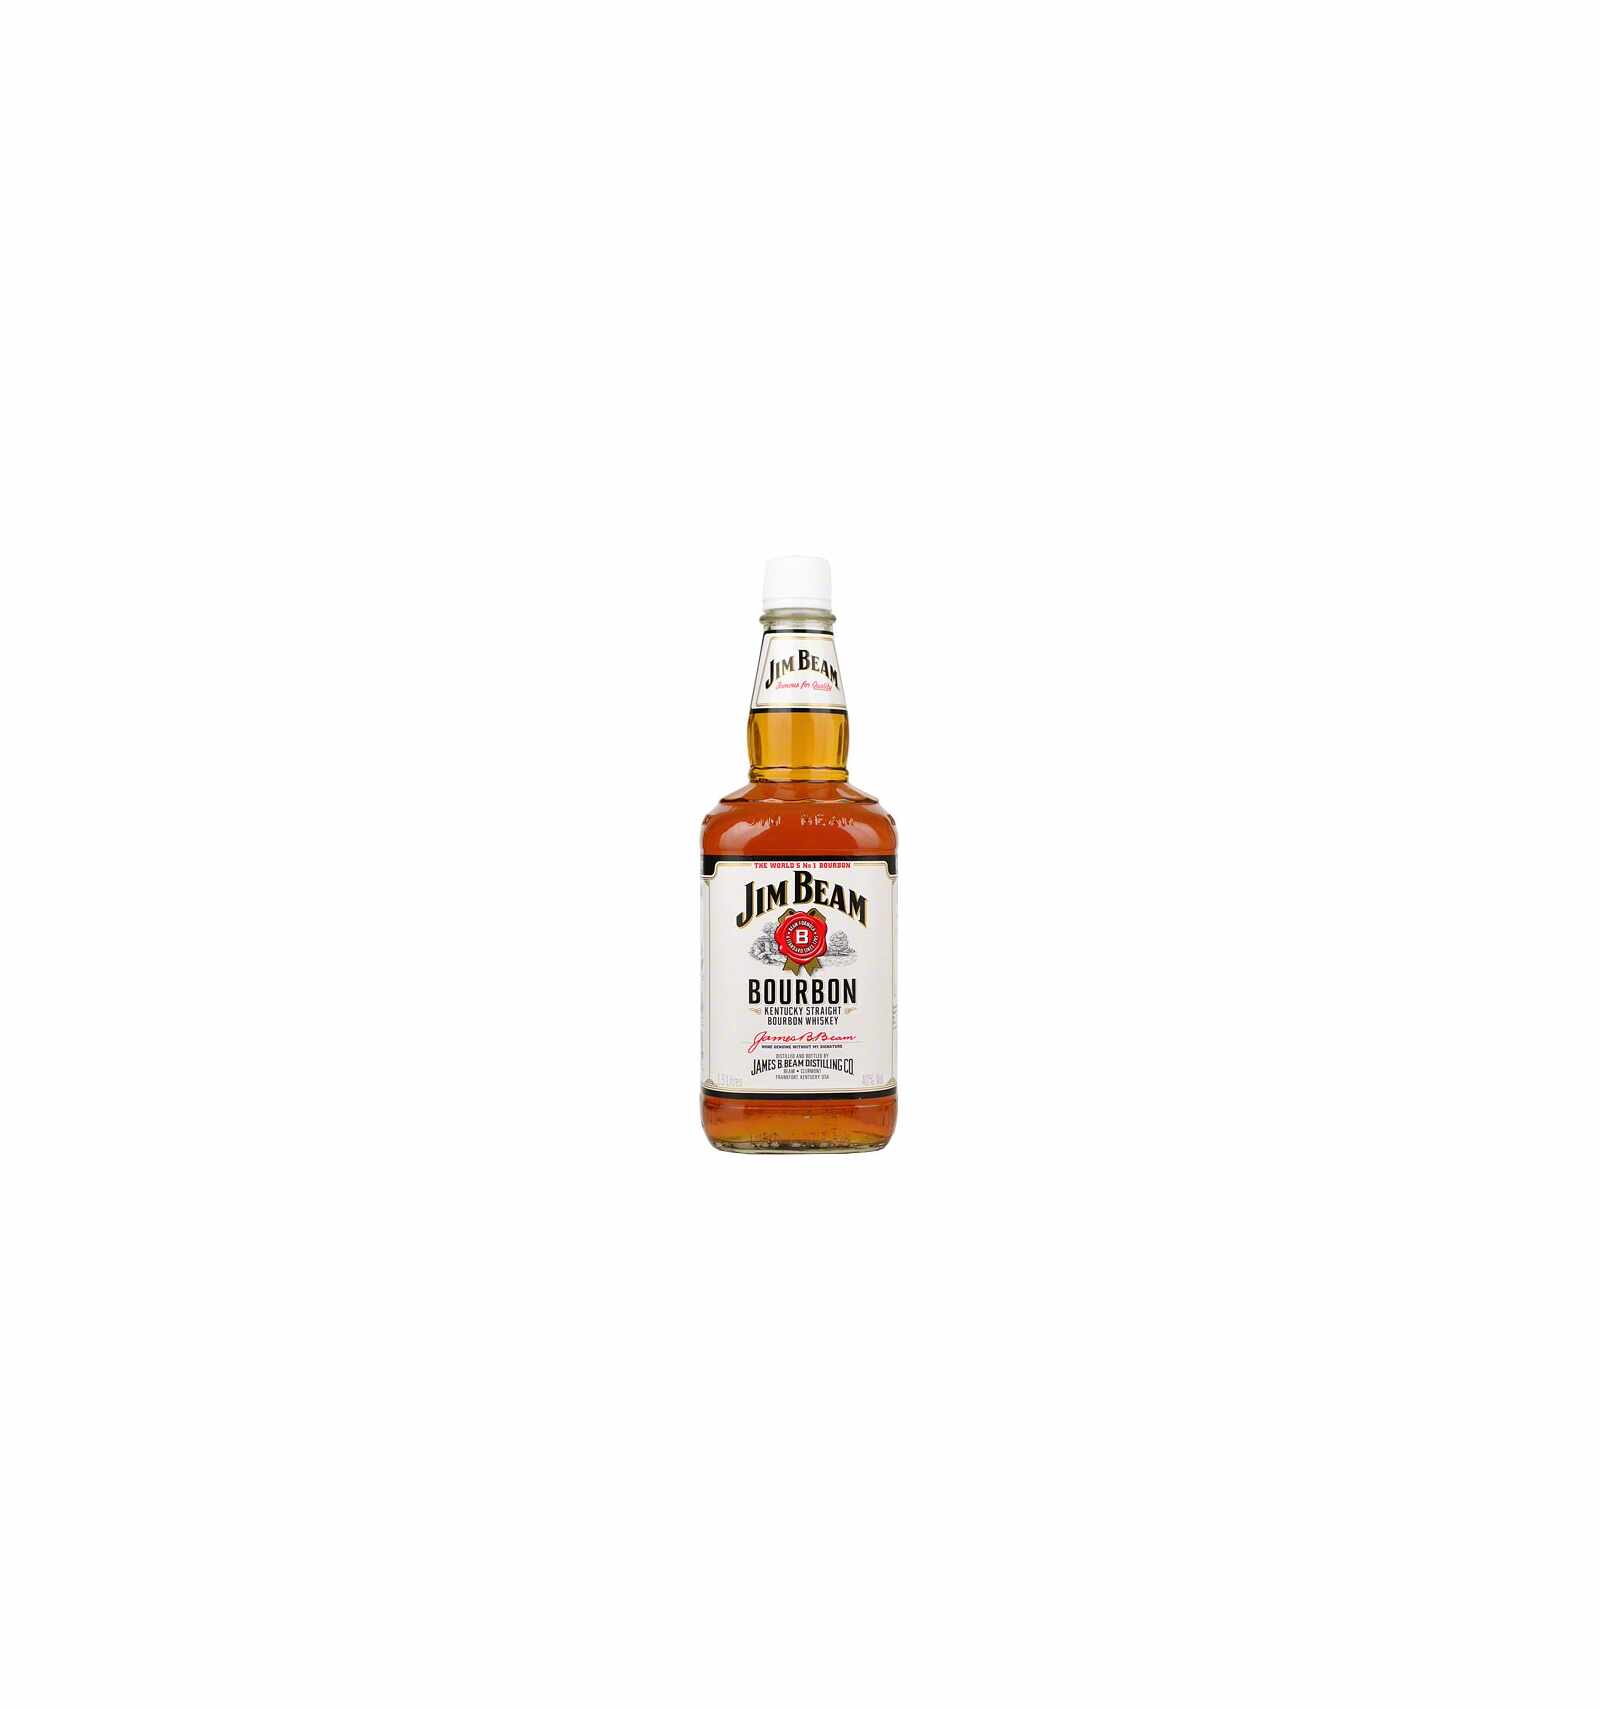 Whisky Bourbon Jim Beam White Label, 40% alc., 1.5L